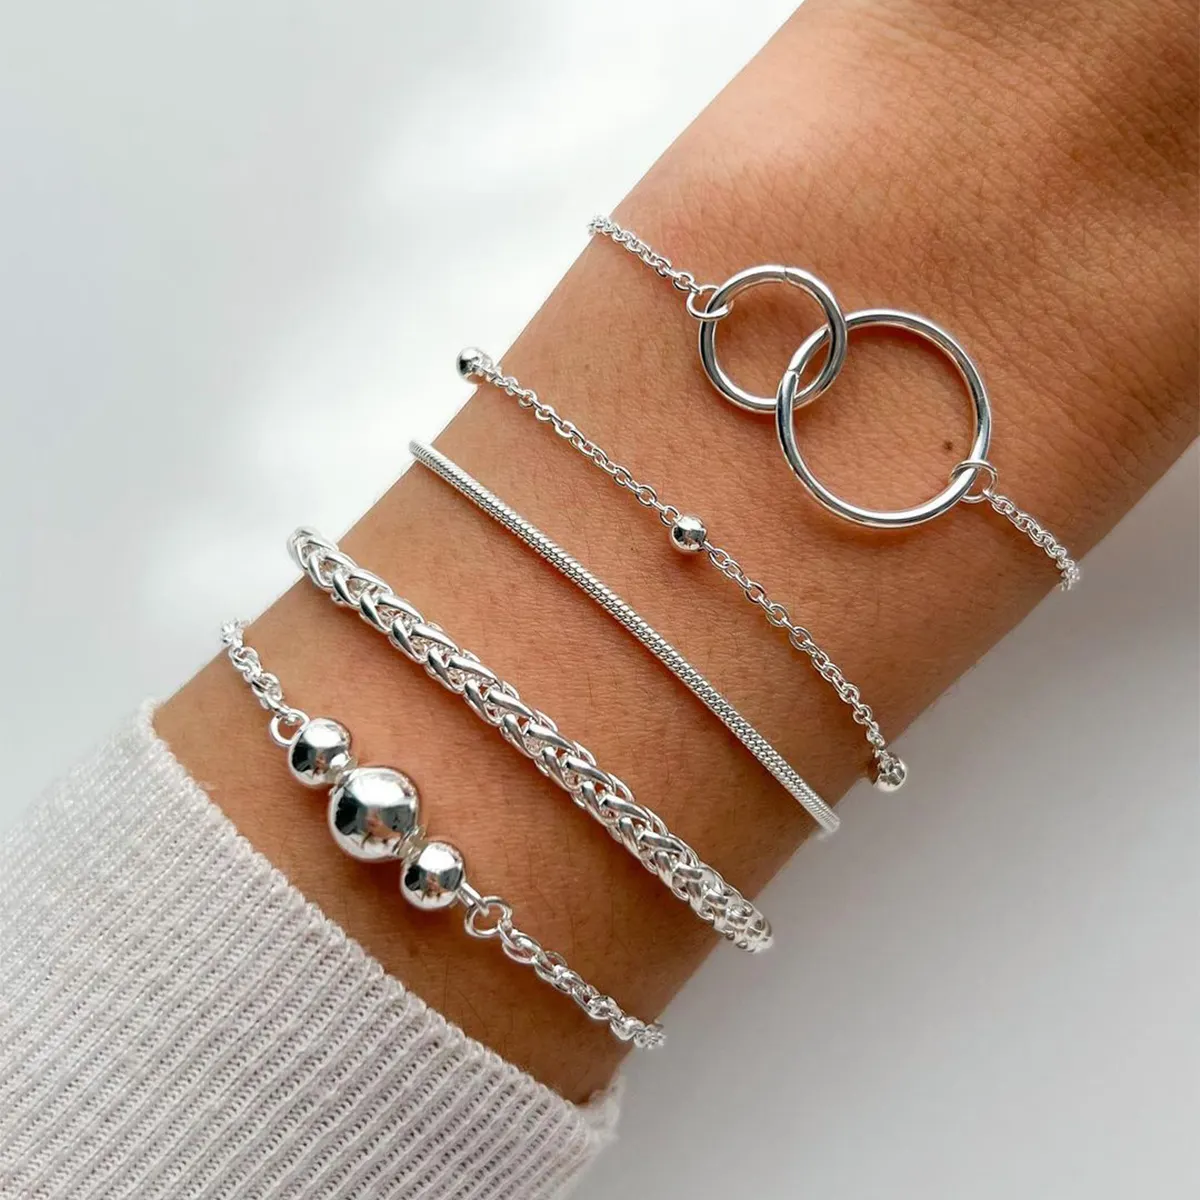 Sindlan 5-Piece Silver Bracelet for Lady Fashion Hand Chain Jewelry Gift